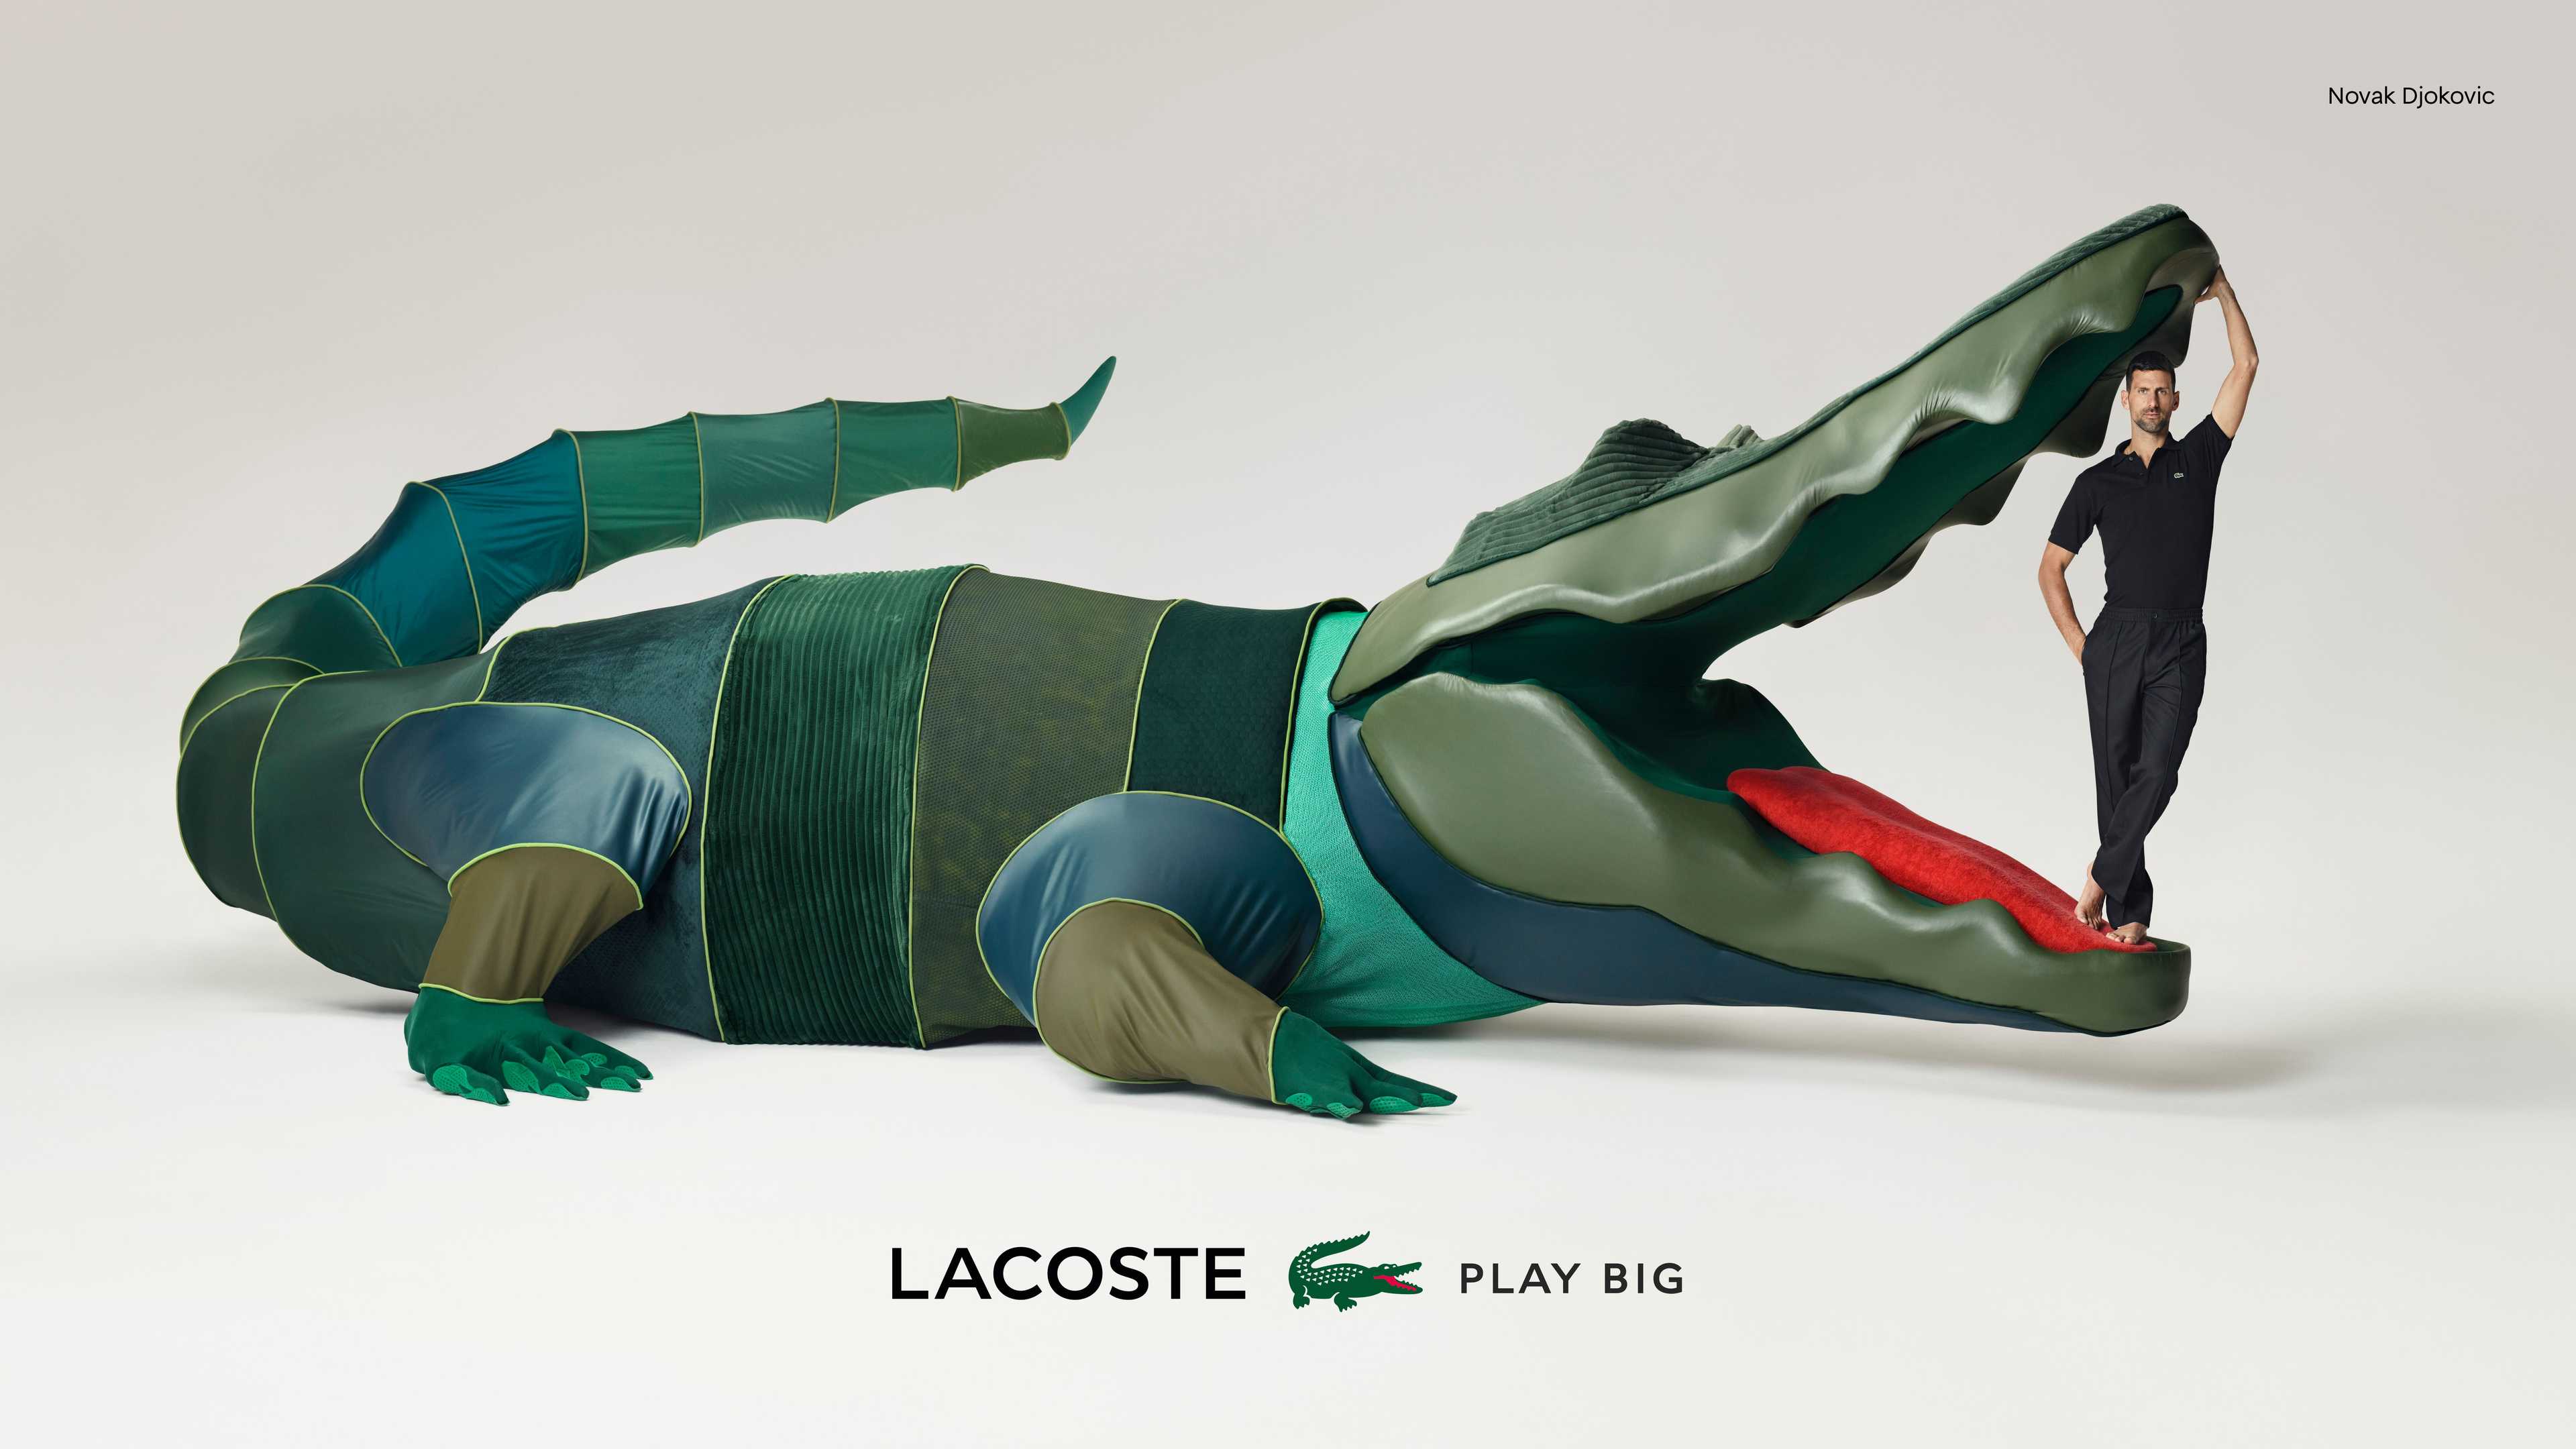 Lacoste - Play big - Willy Vanderperre - 6819